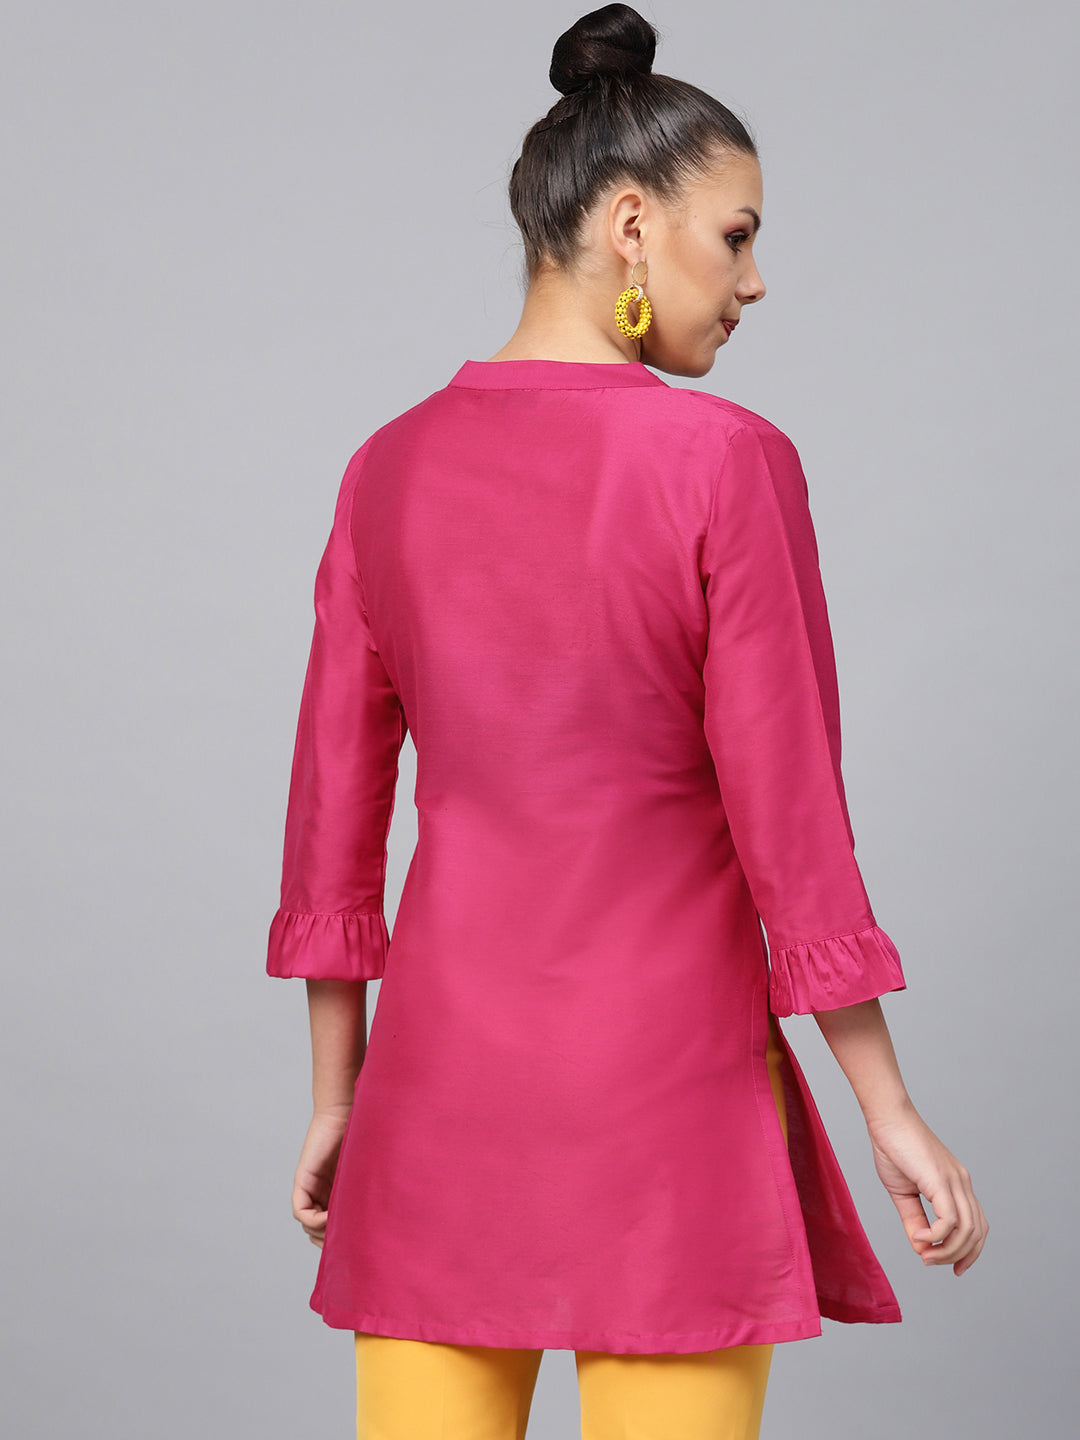 Bhama Cuture Pink Yoke Design A-Line Tunic